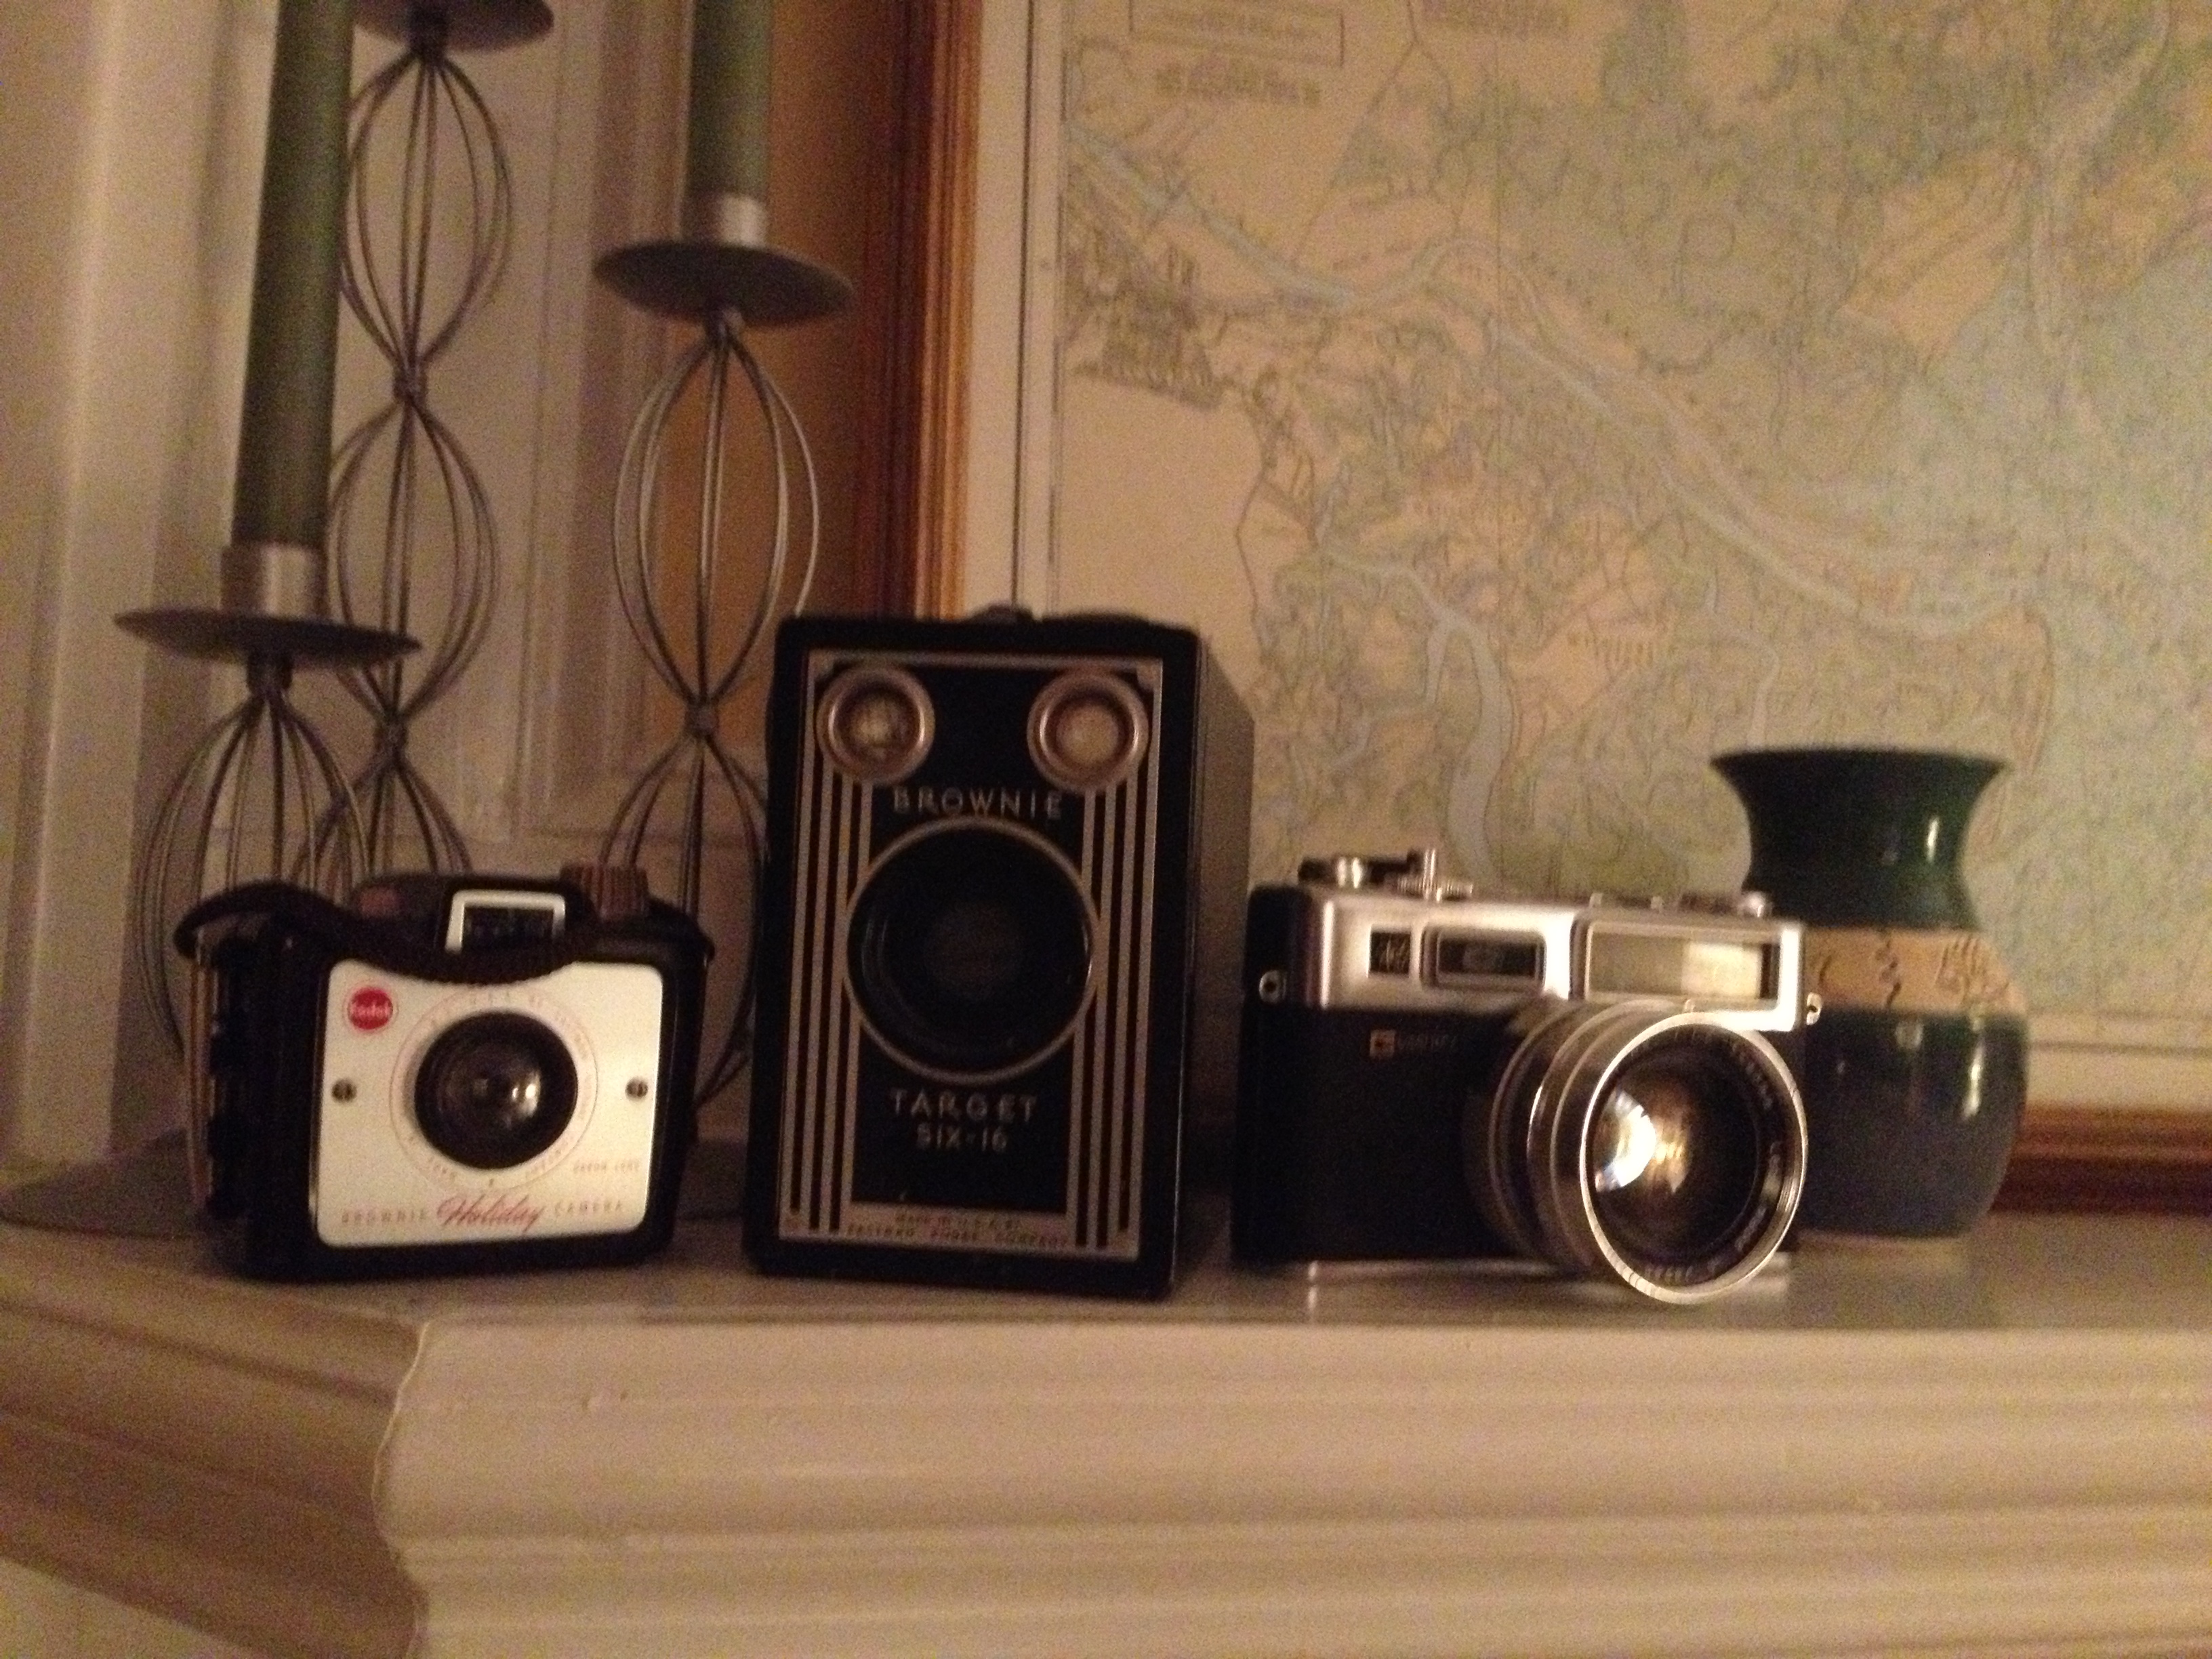 Three cameras